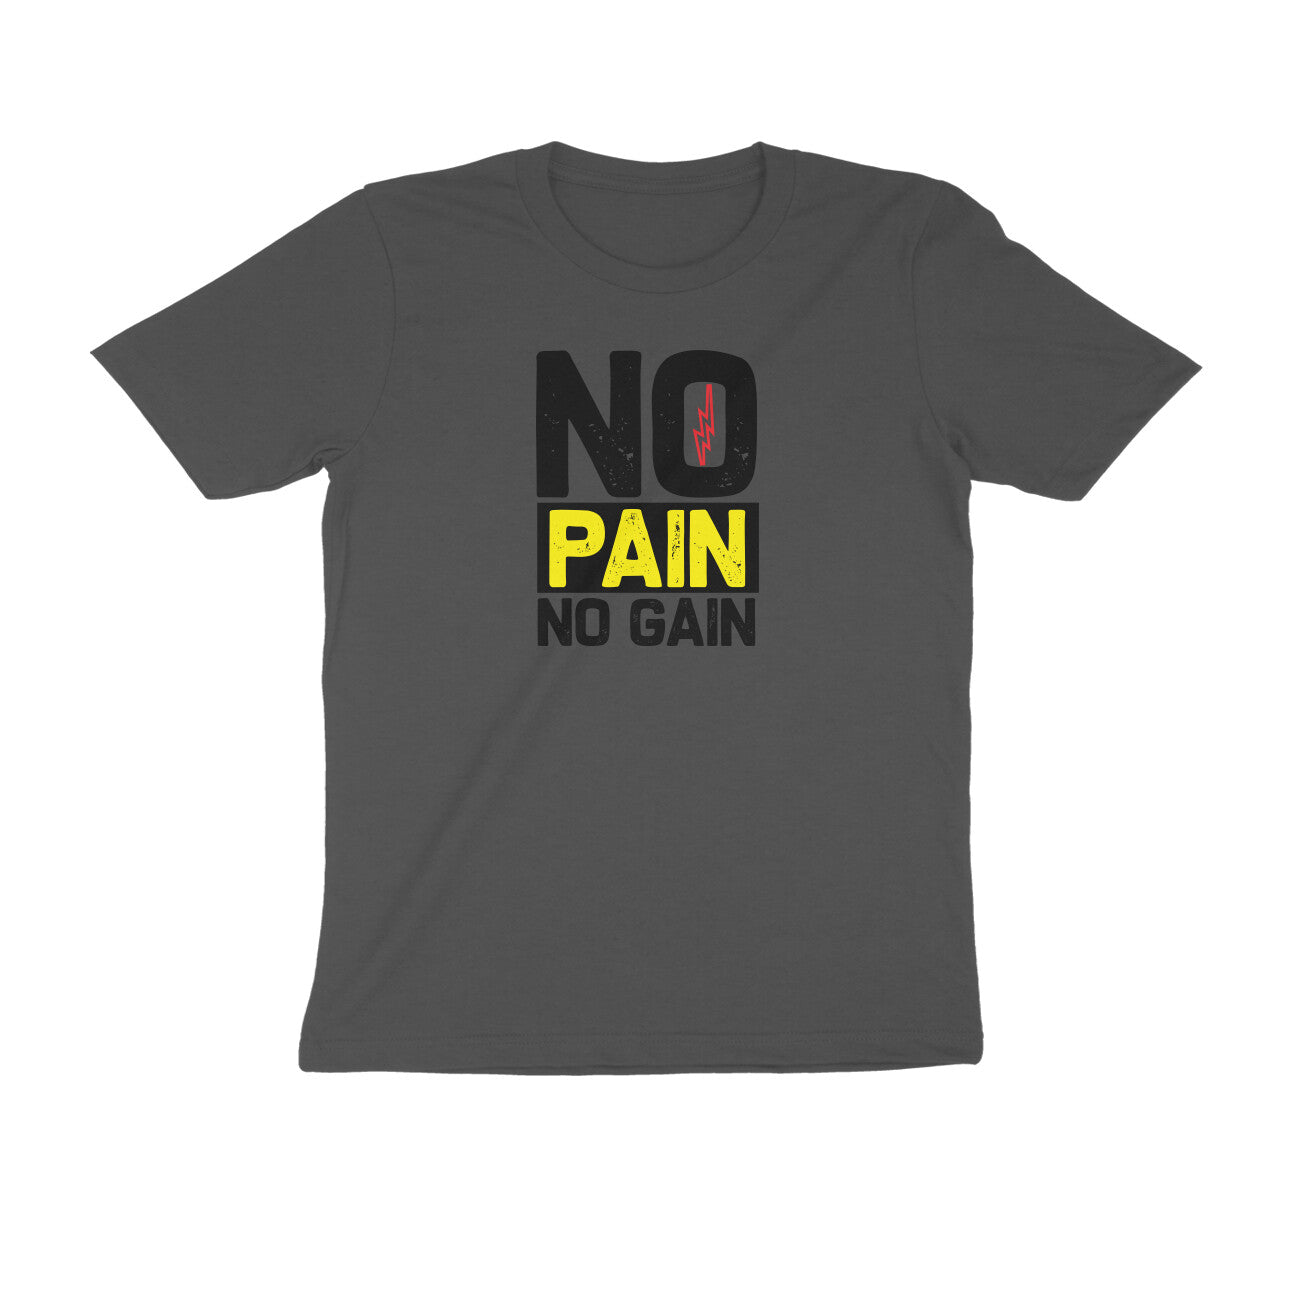 TNH - Men's Round Neck Tshirt - No Pain No Gain